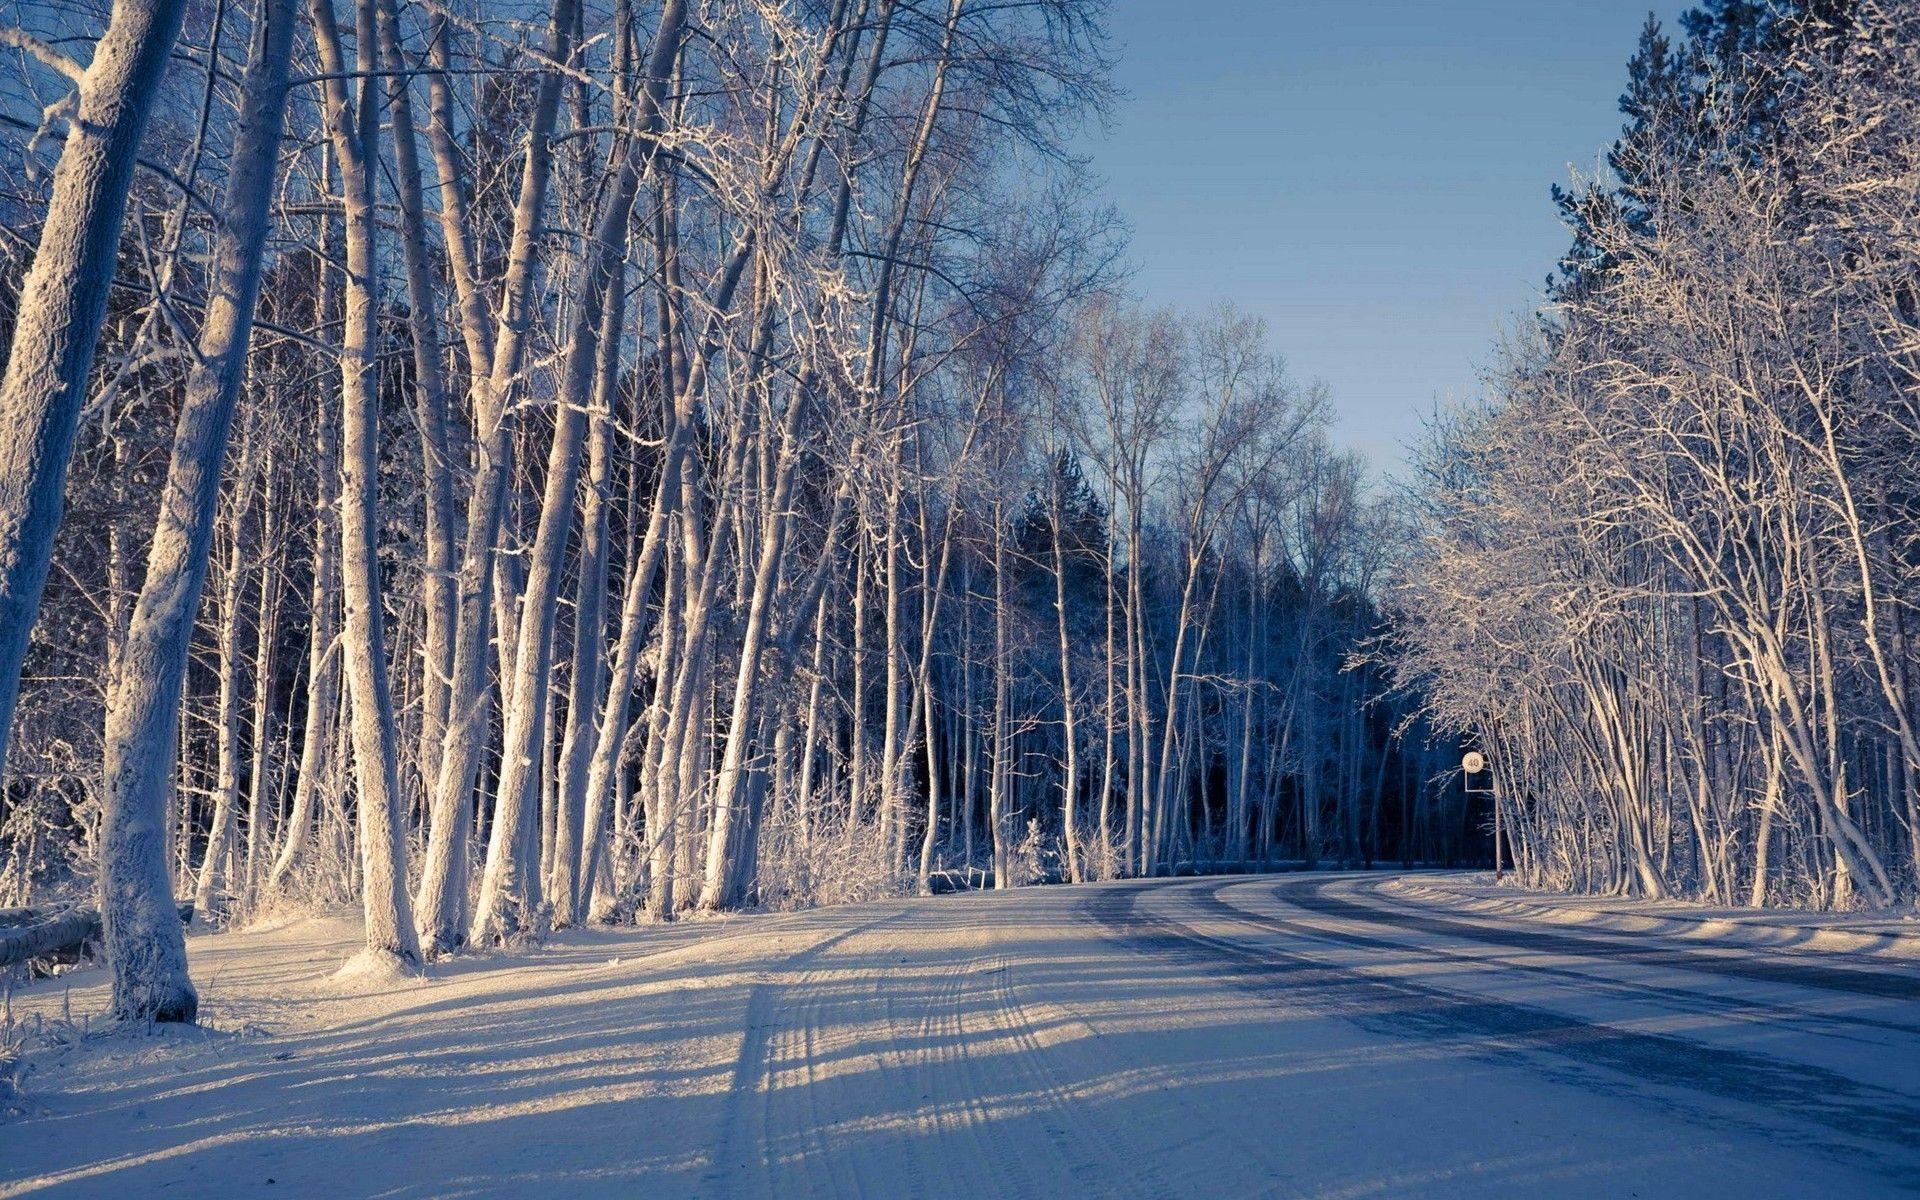 Road curve through winter forest. Winter Wonderland. Nature image